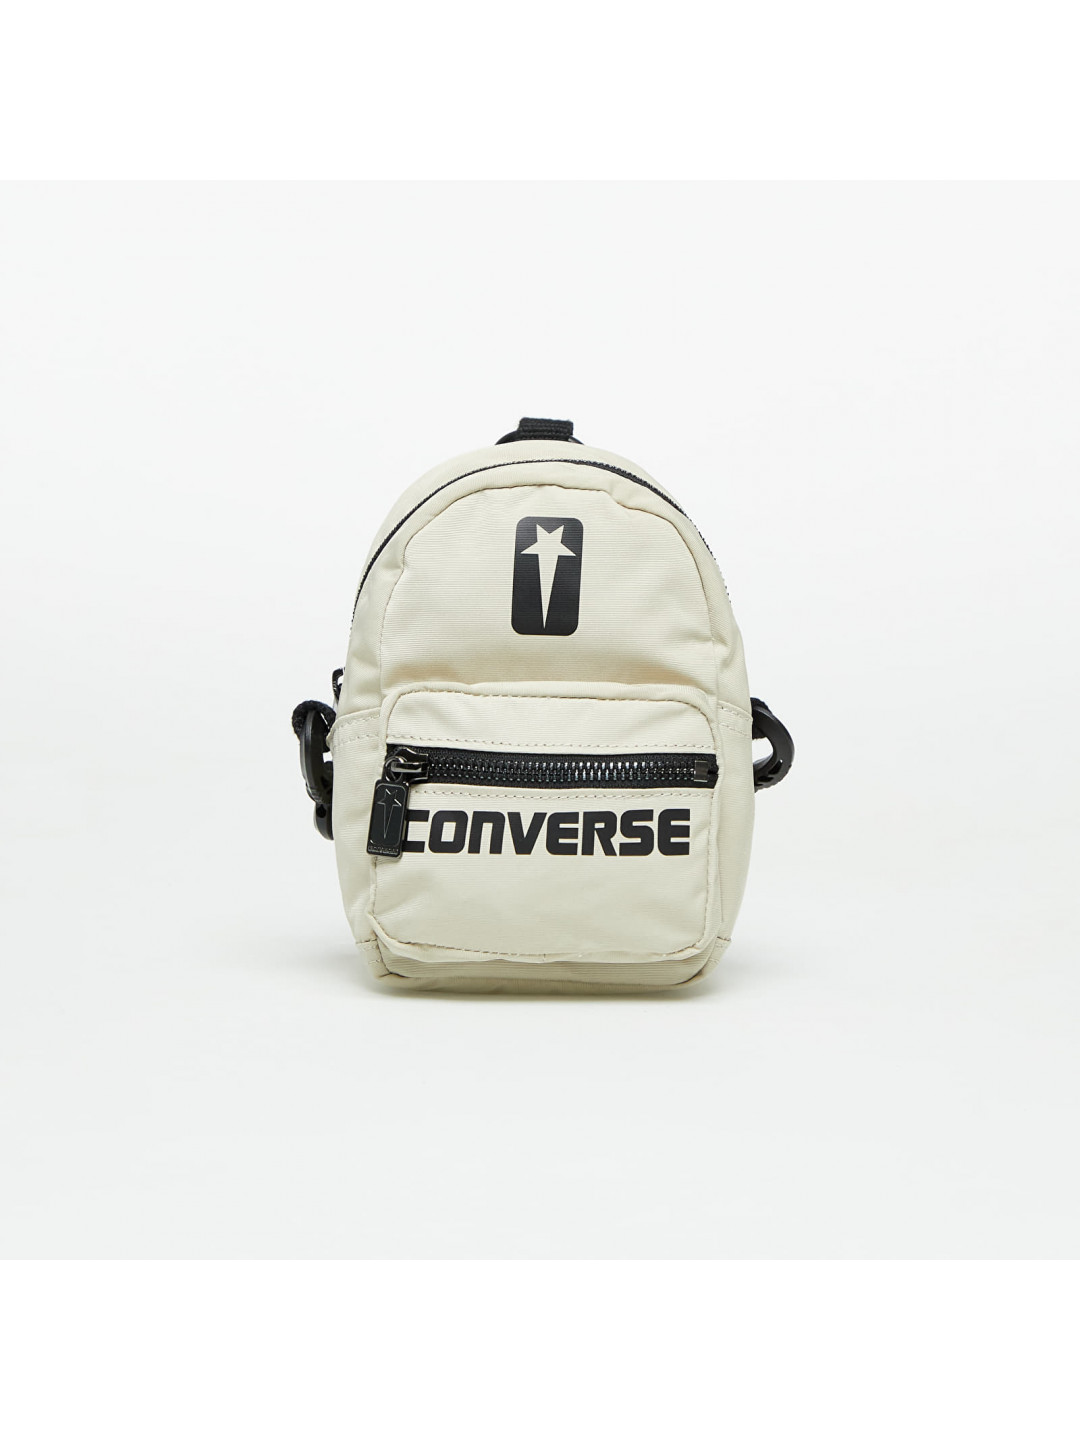 Converse x Rick Owens DRKSHDW Mini Go Backpack Pelican